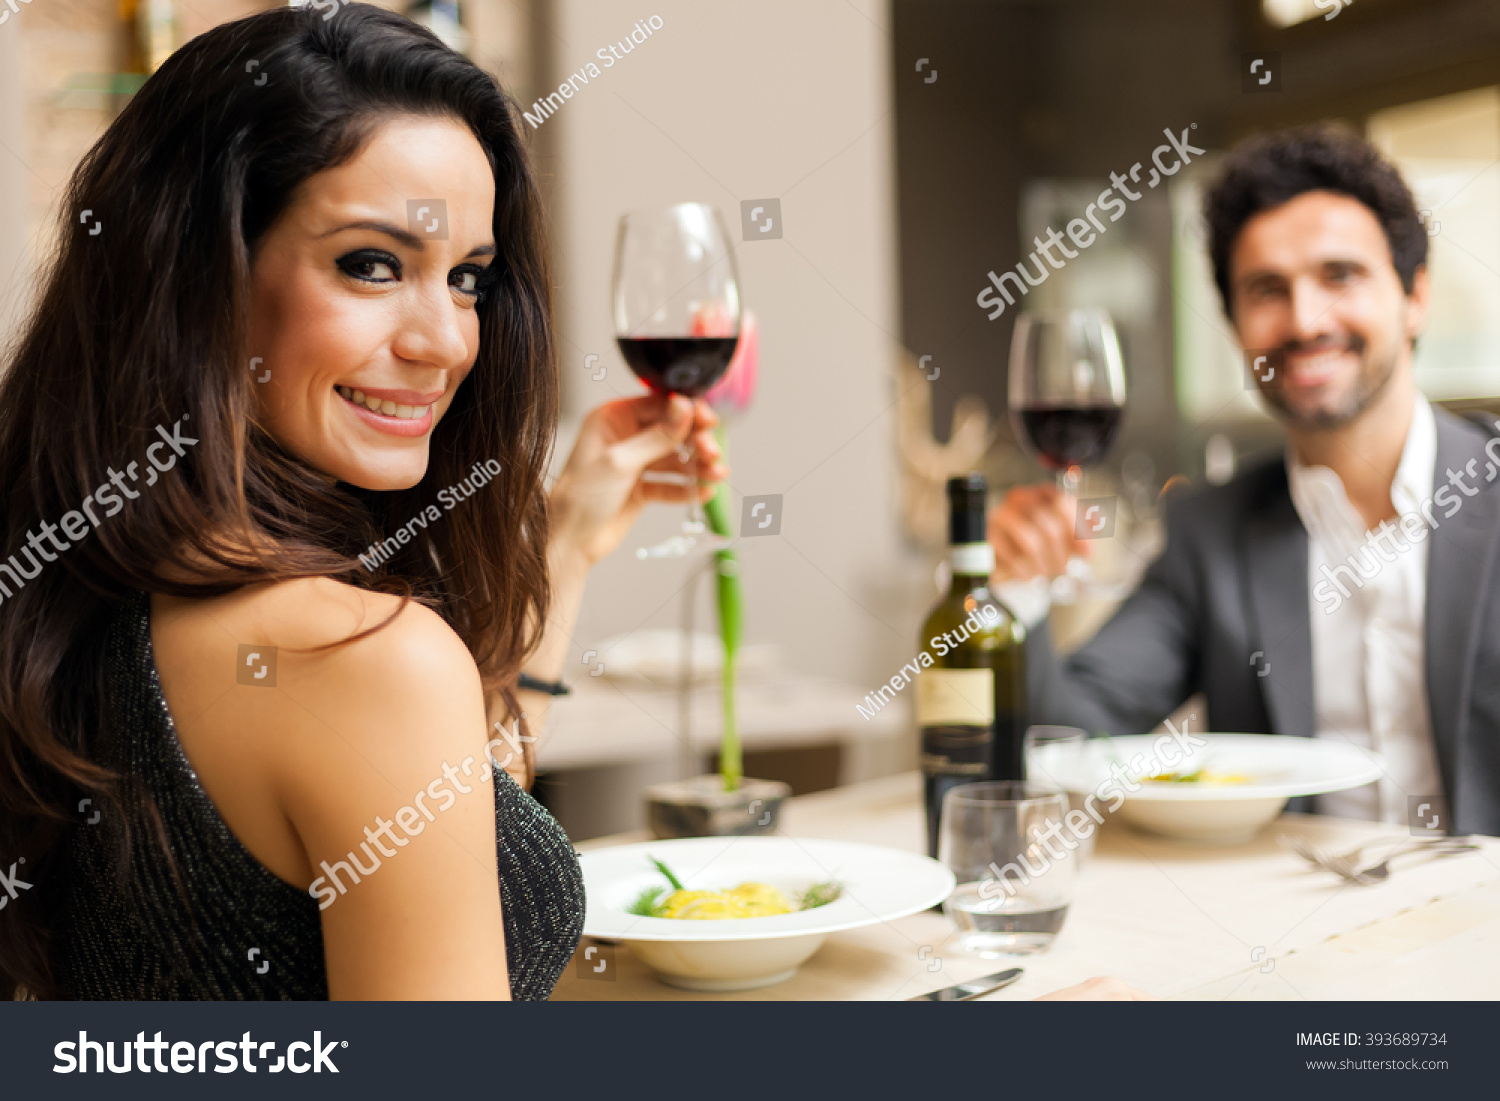 125,934 Romantic occasions Images, Stock Photos & Vectors | Shutterstock